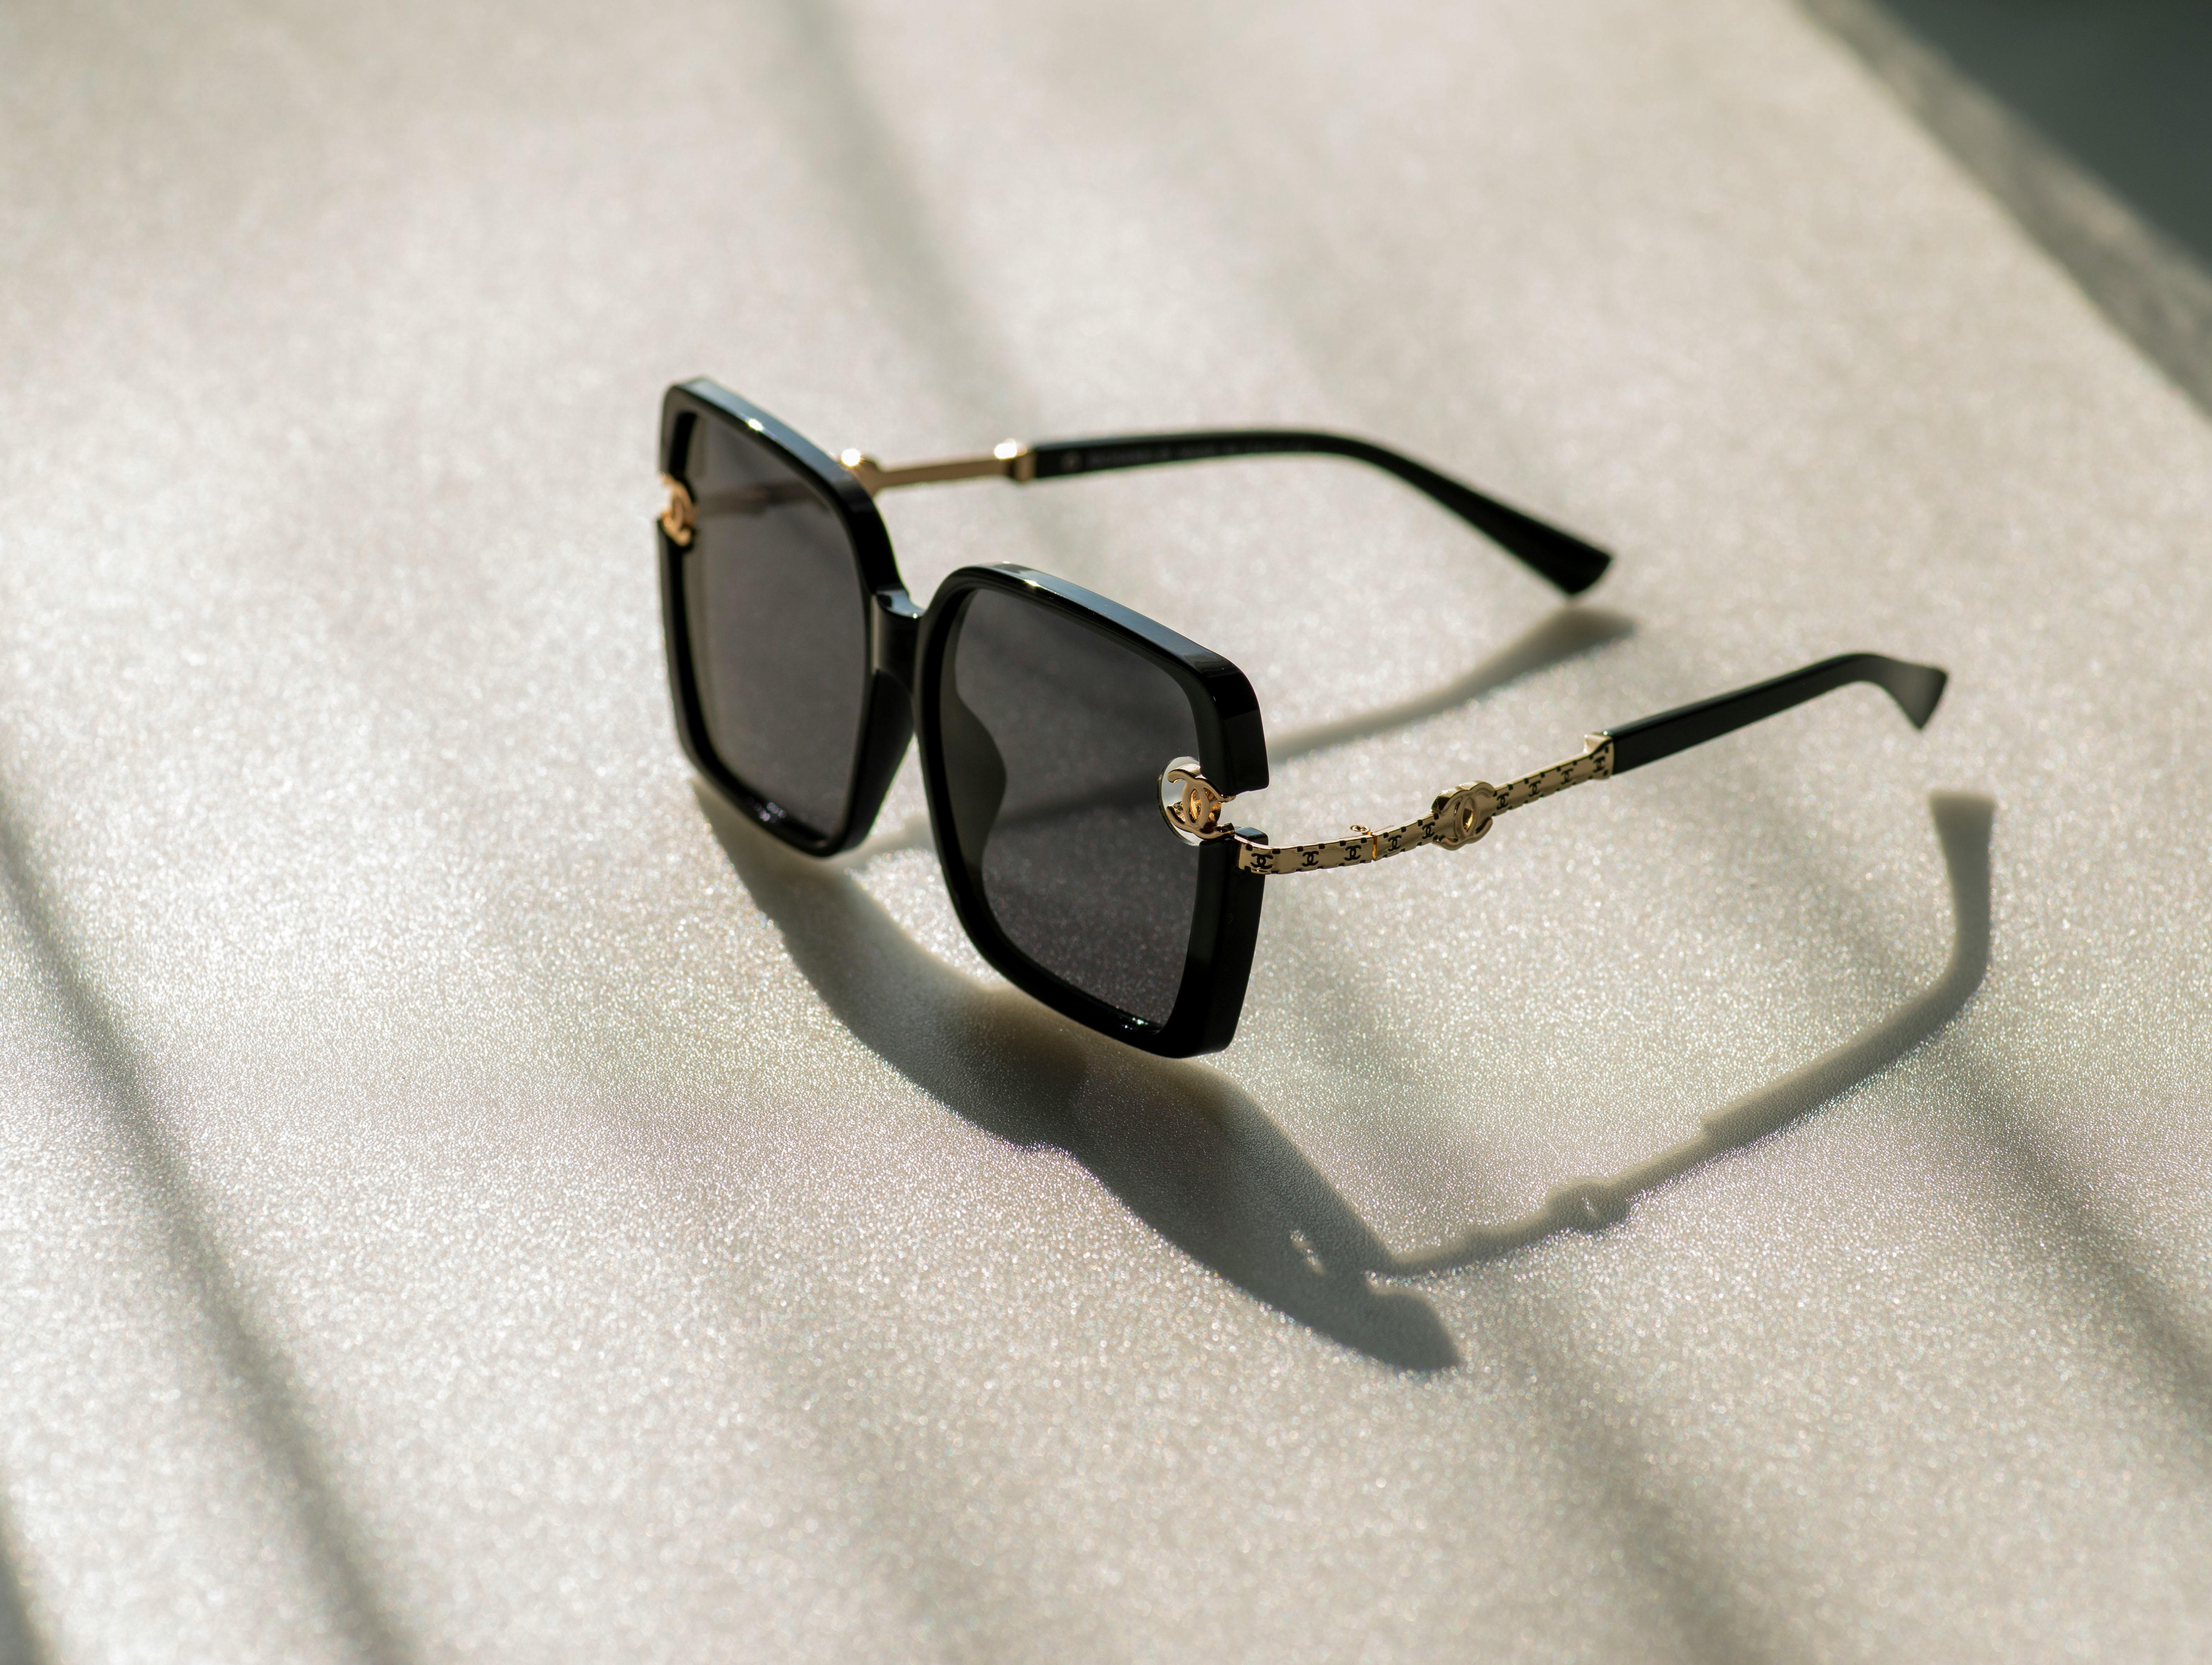 Chanel  Black  beige oval sunglasses 435  Oval sunglasses Chanel  sunglasses Stylish glasses